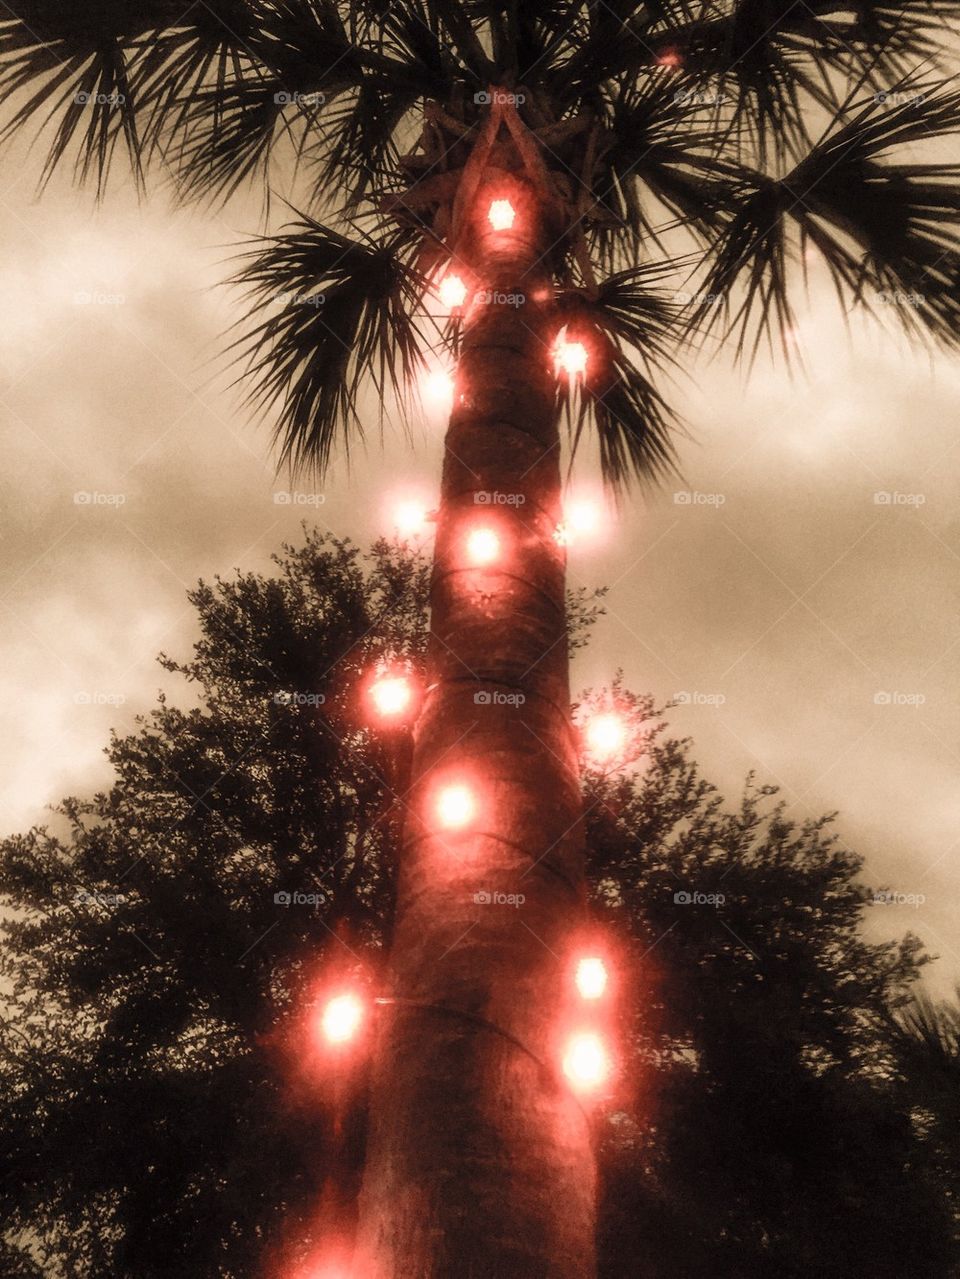 Carmine Palm Christmas Tree